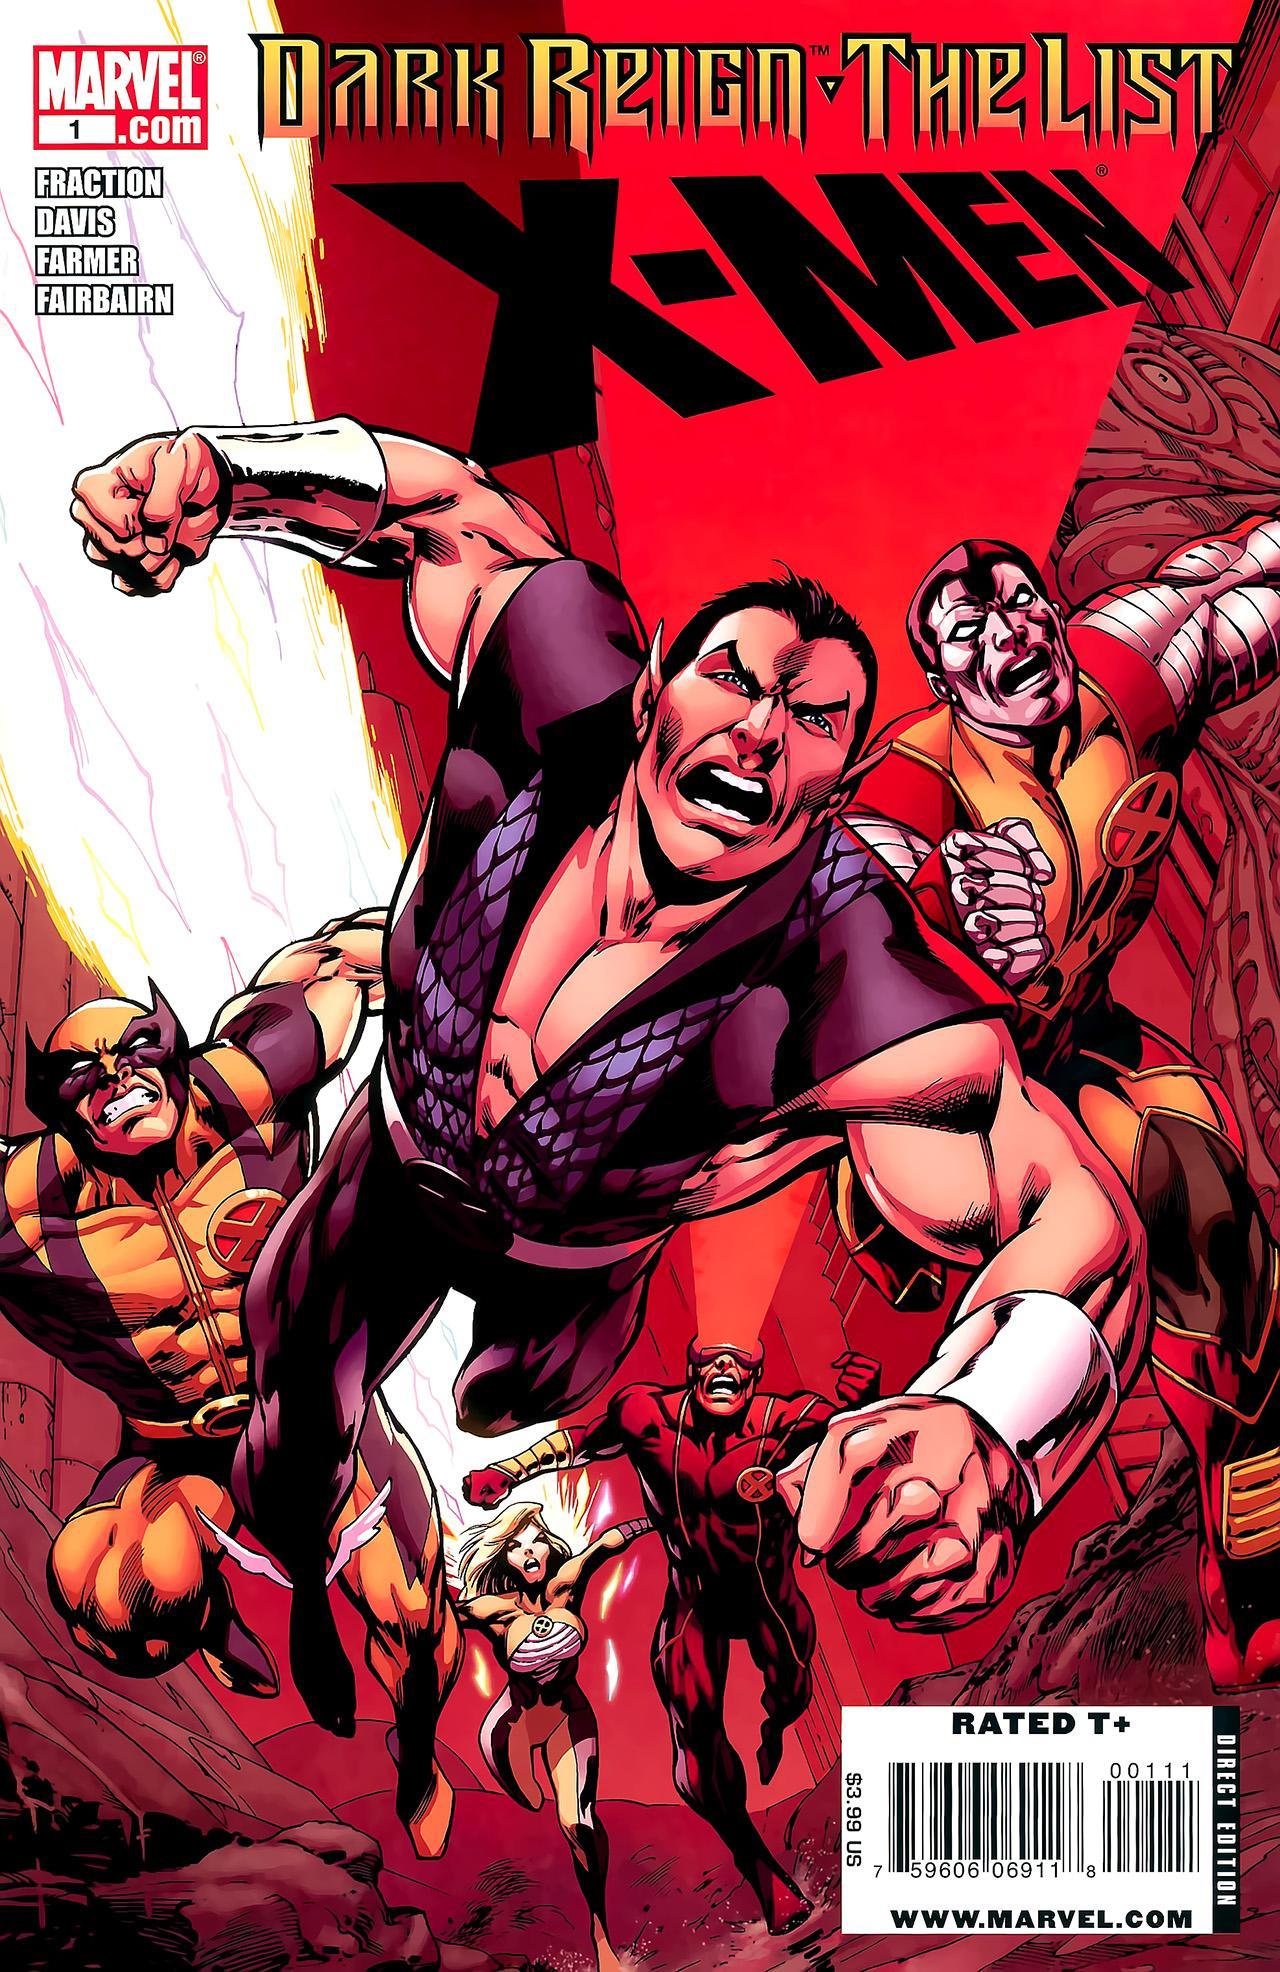 Dark Reign: The List - X-Men Vol. 1 #1